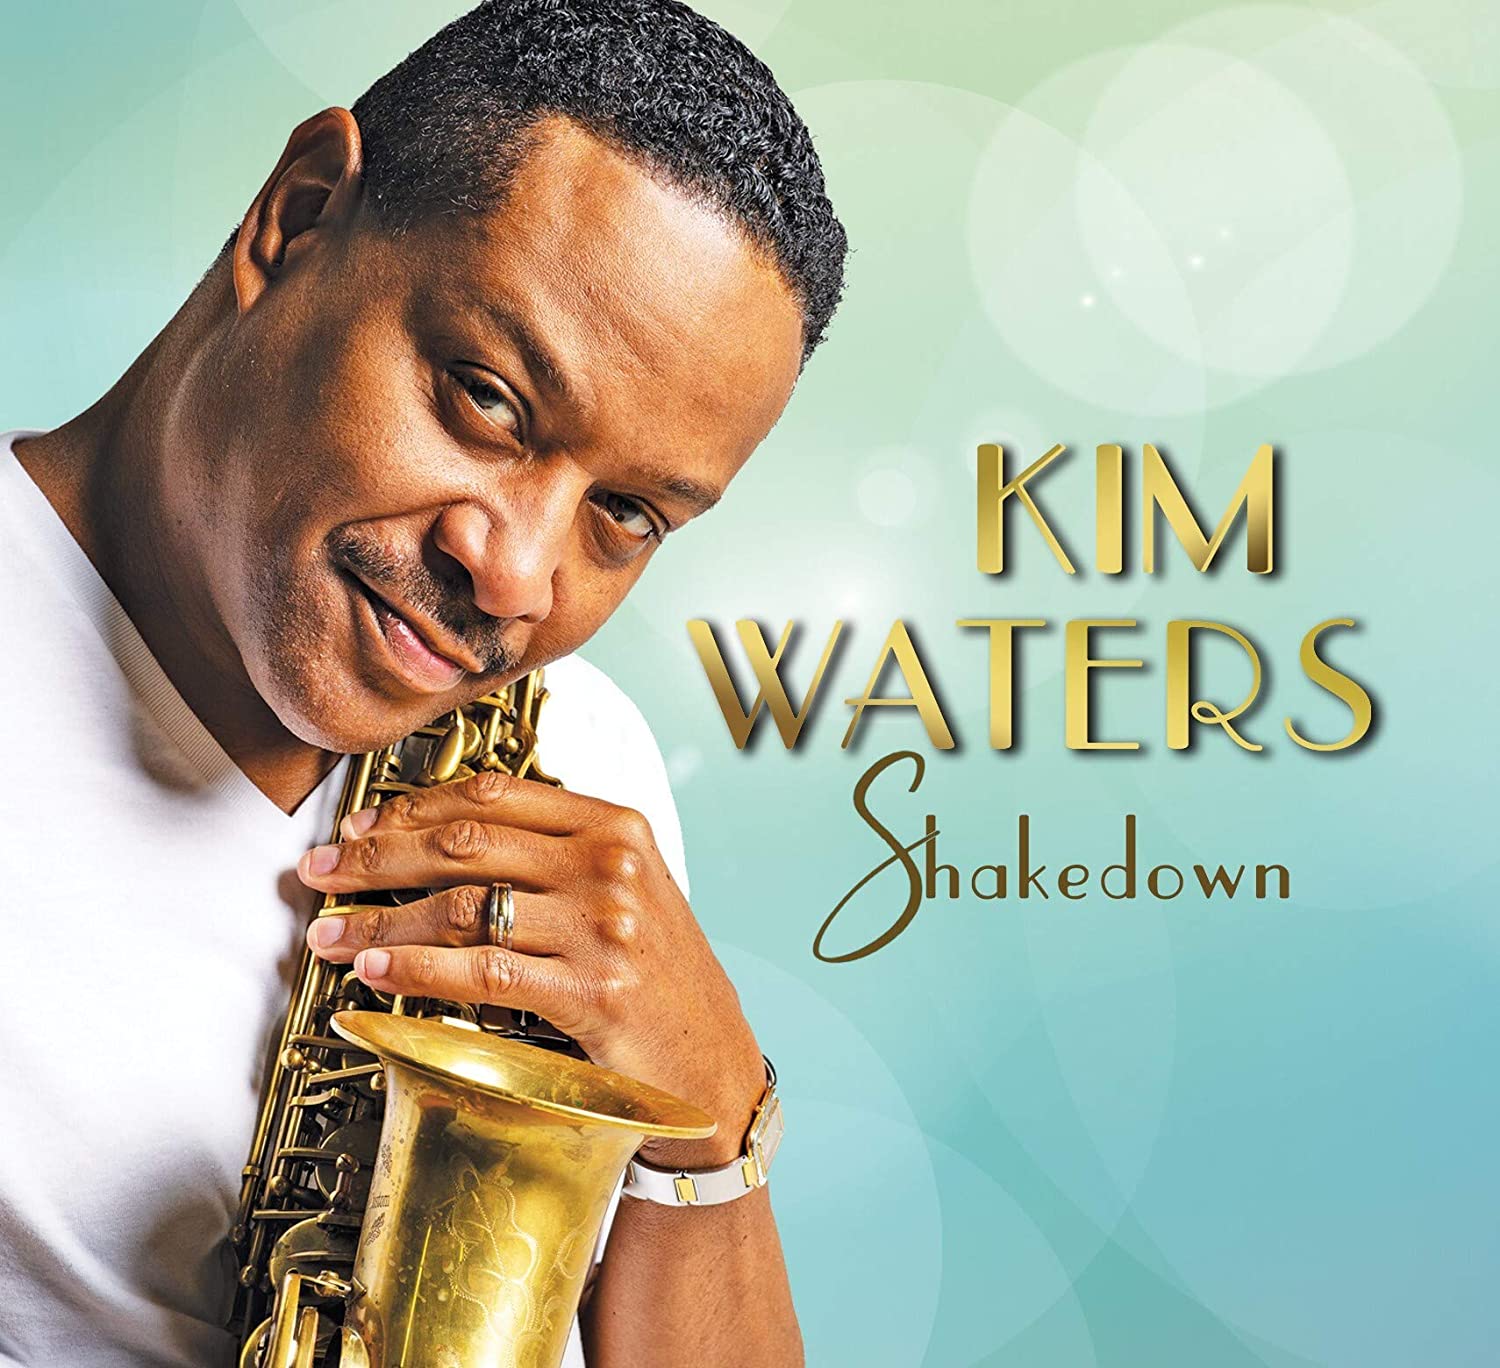 Kim Waters Shakedown cover artwork